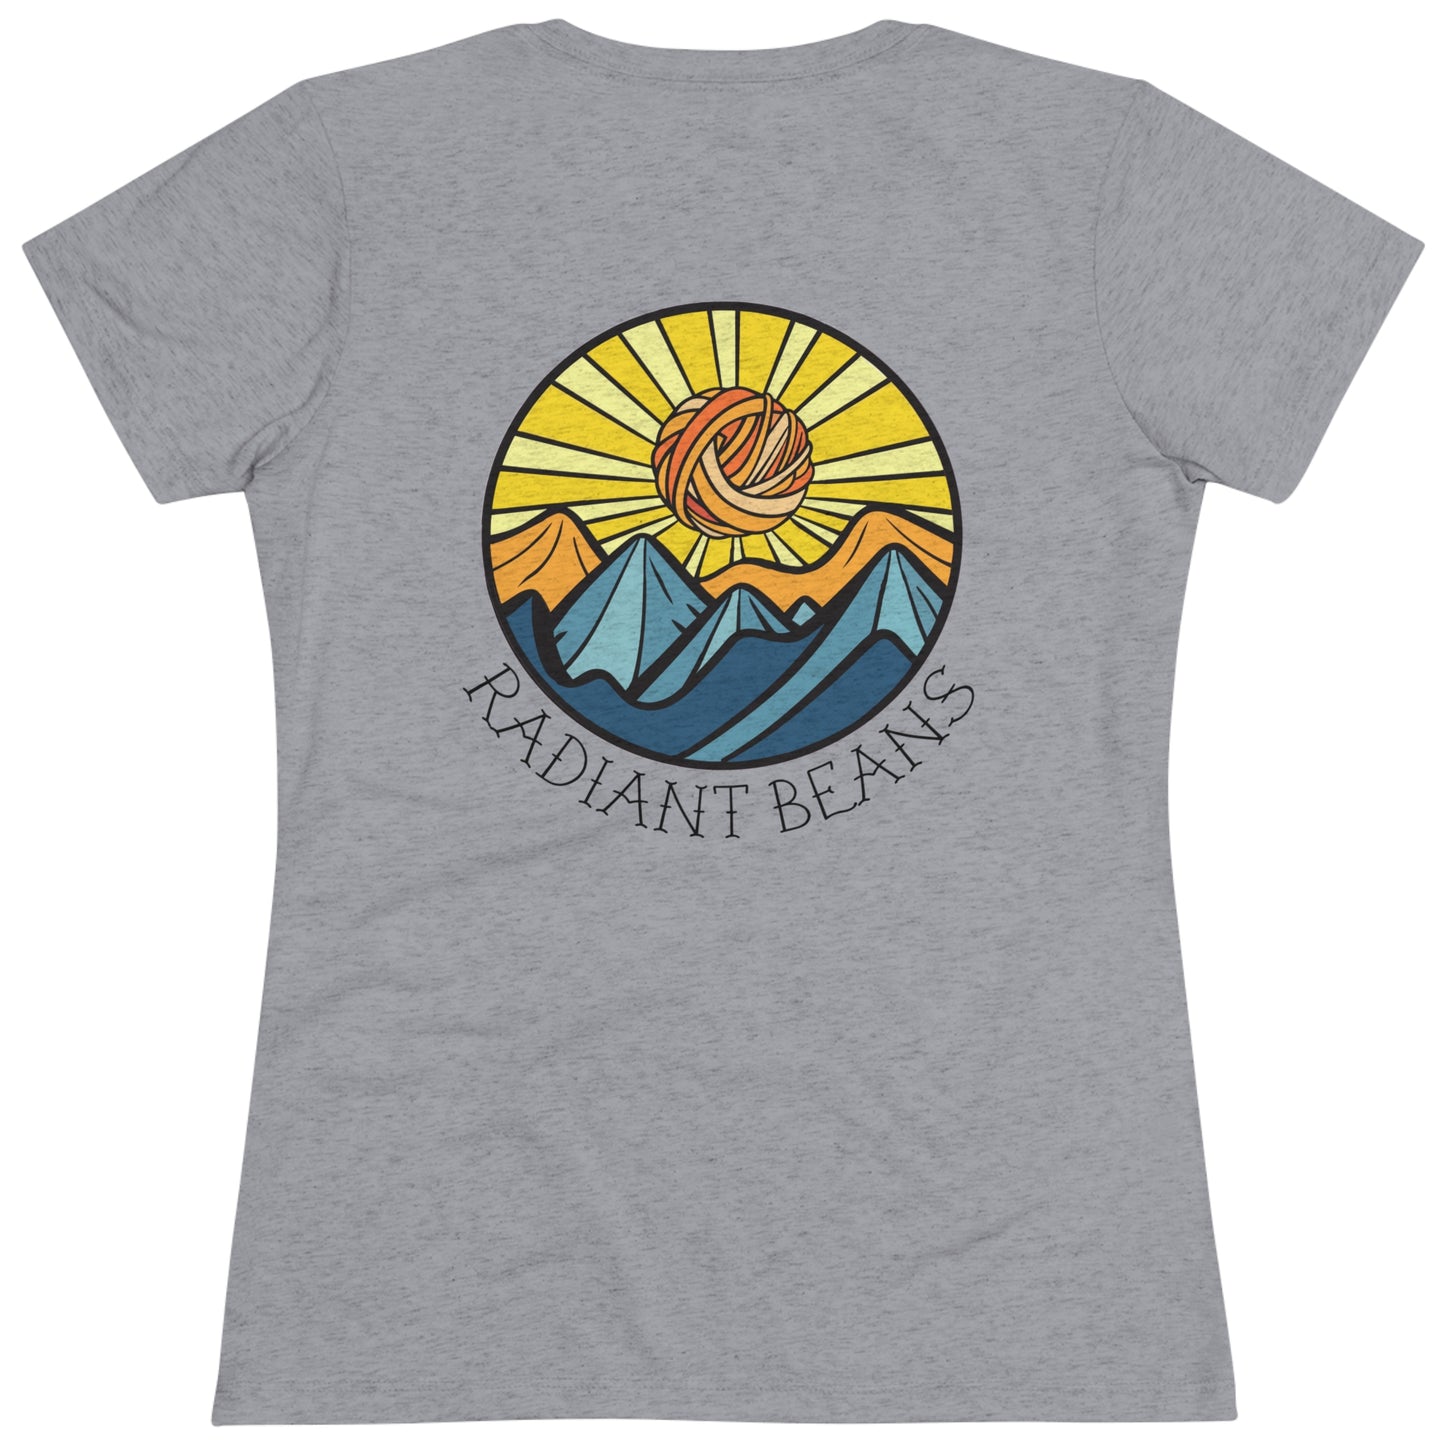 Stay Radiant - Women's T-Shirt